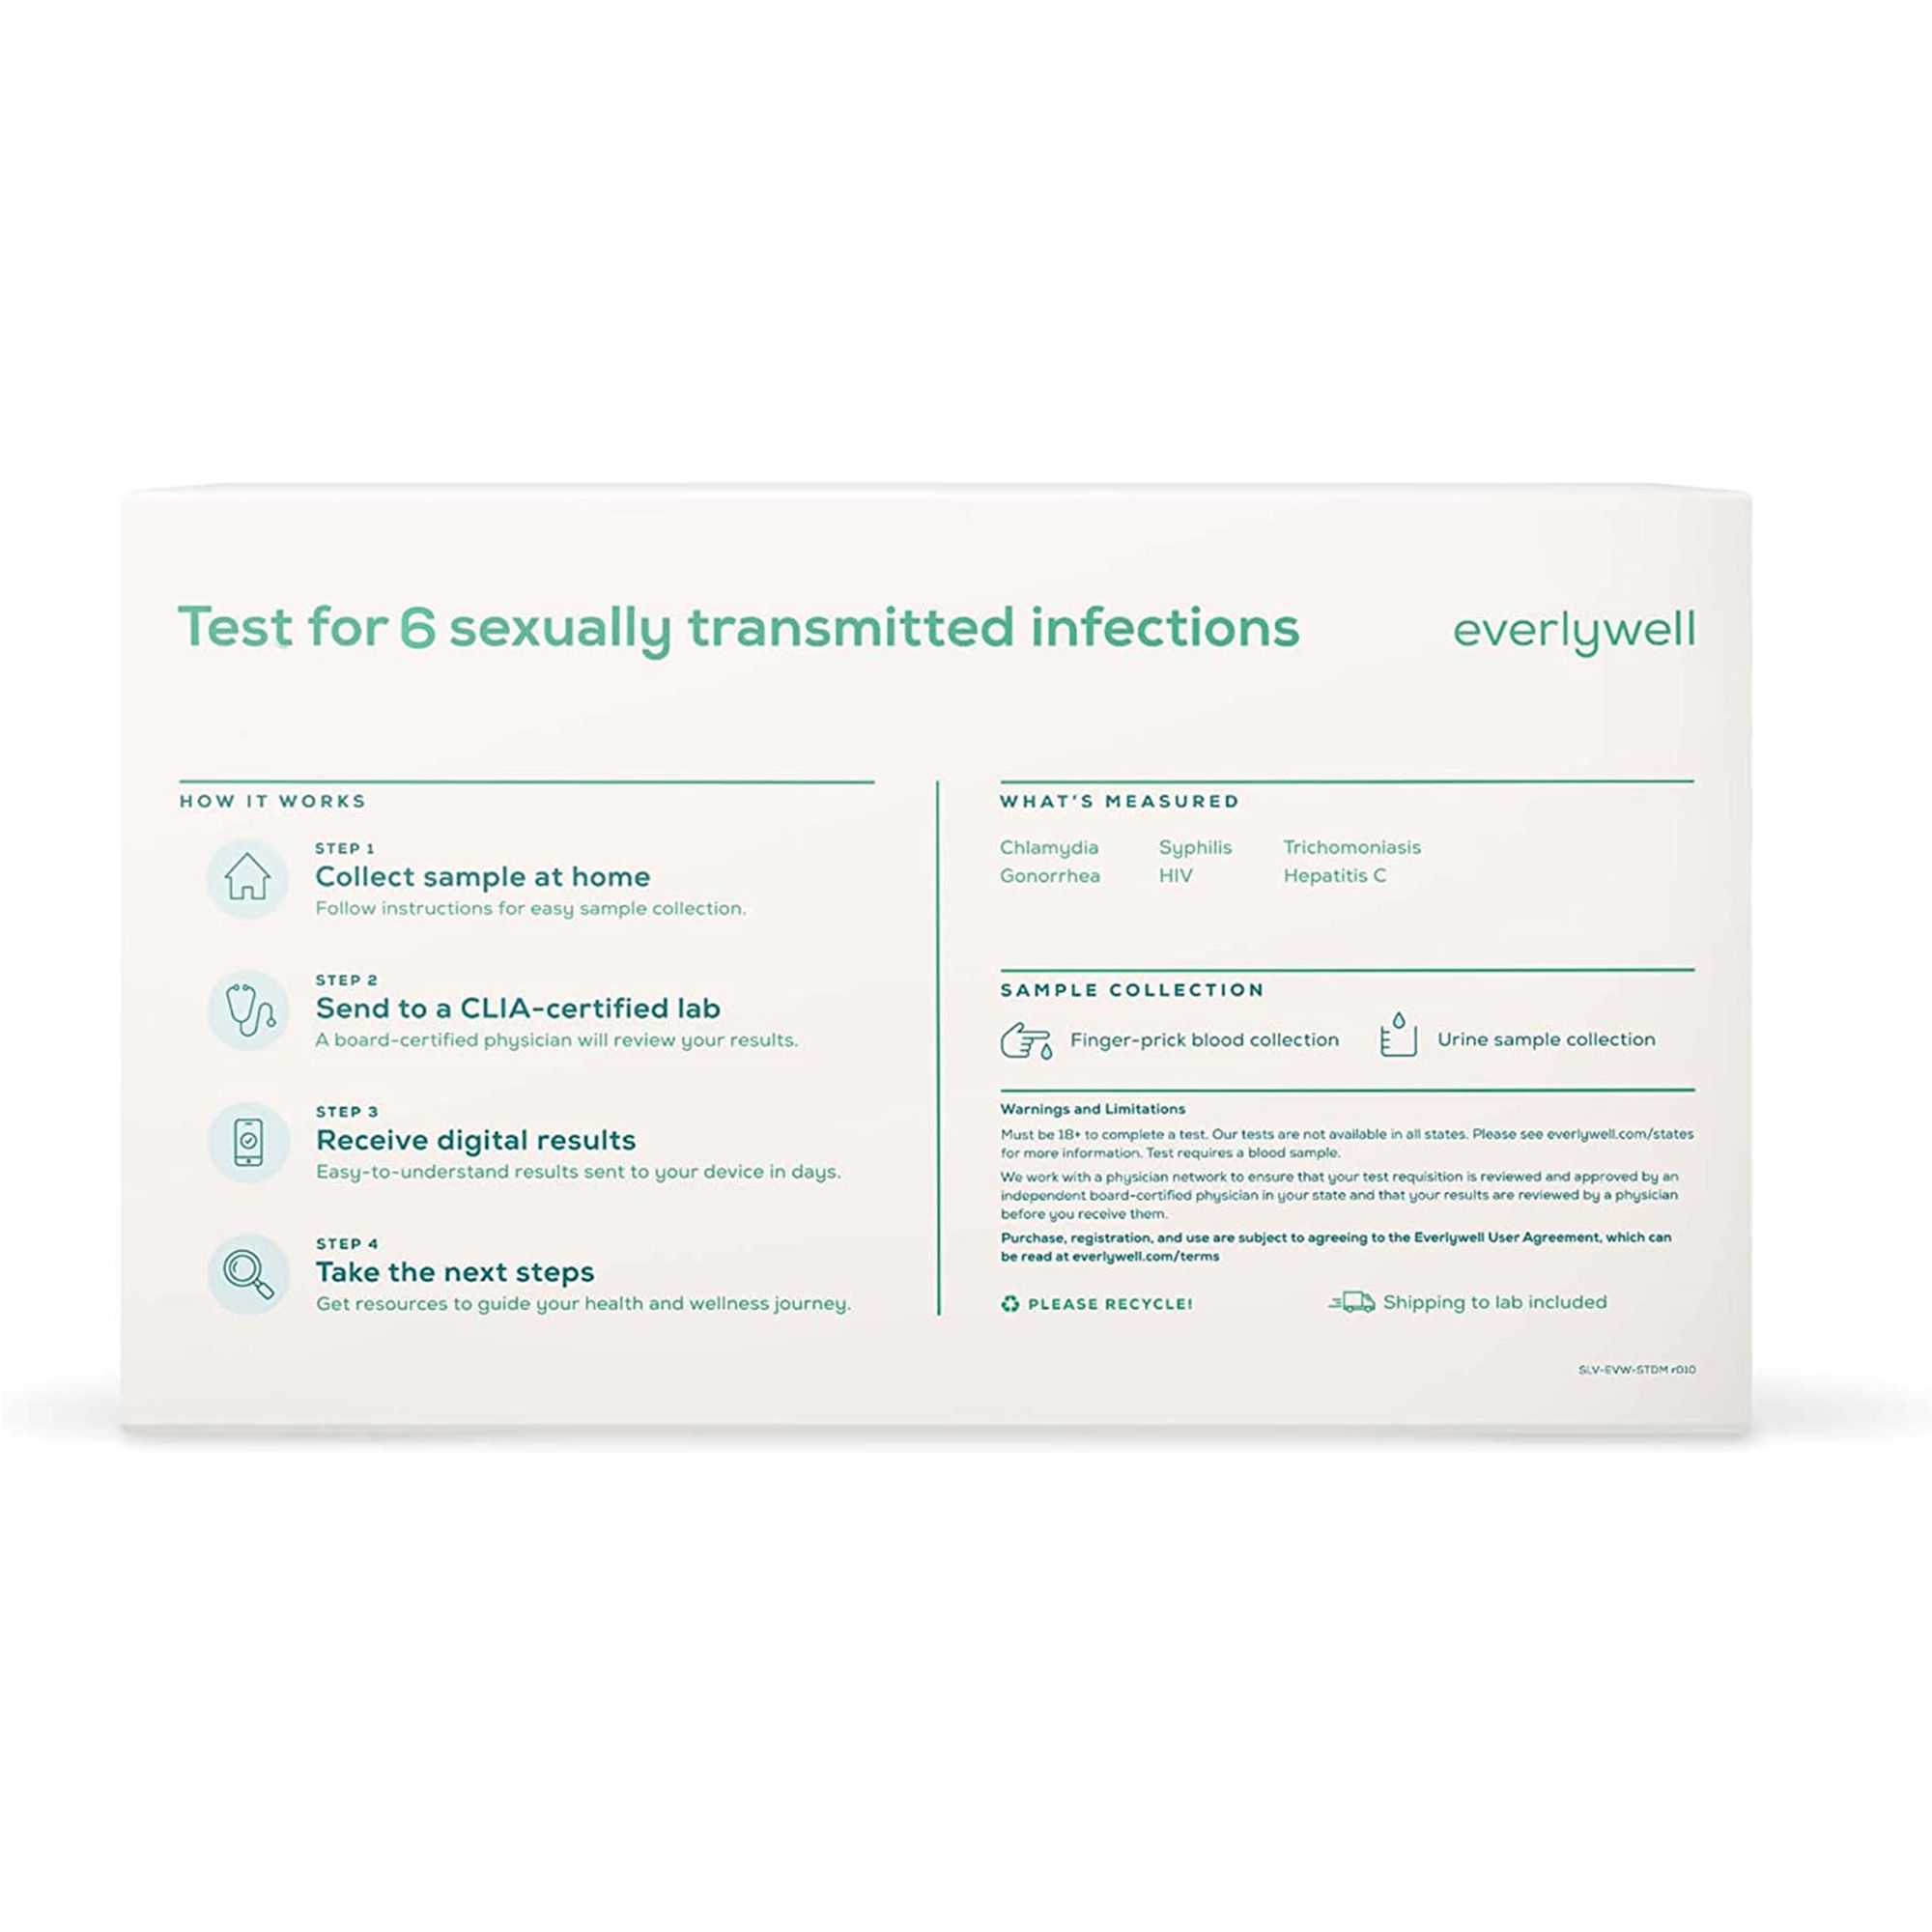 Everlywell Male STD Test - 1 Test Kit